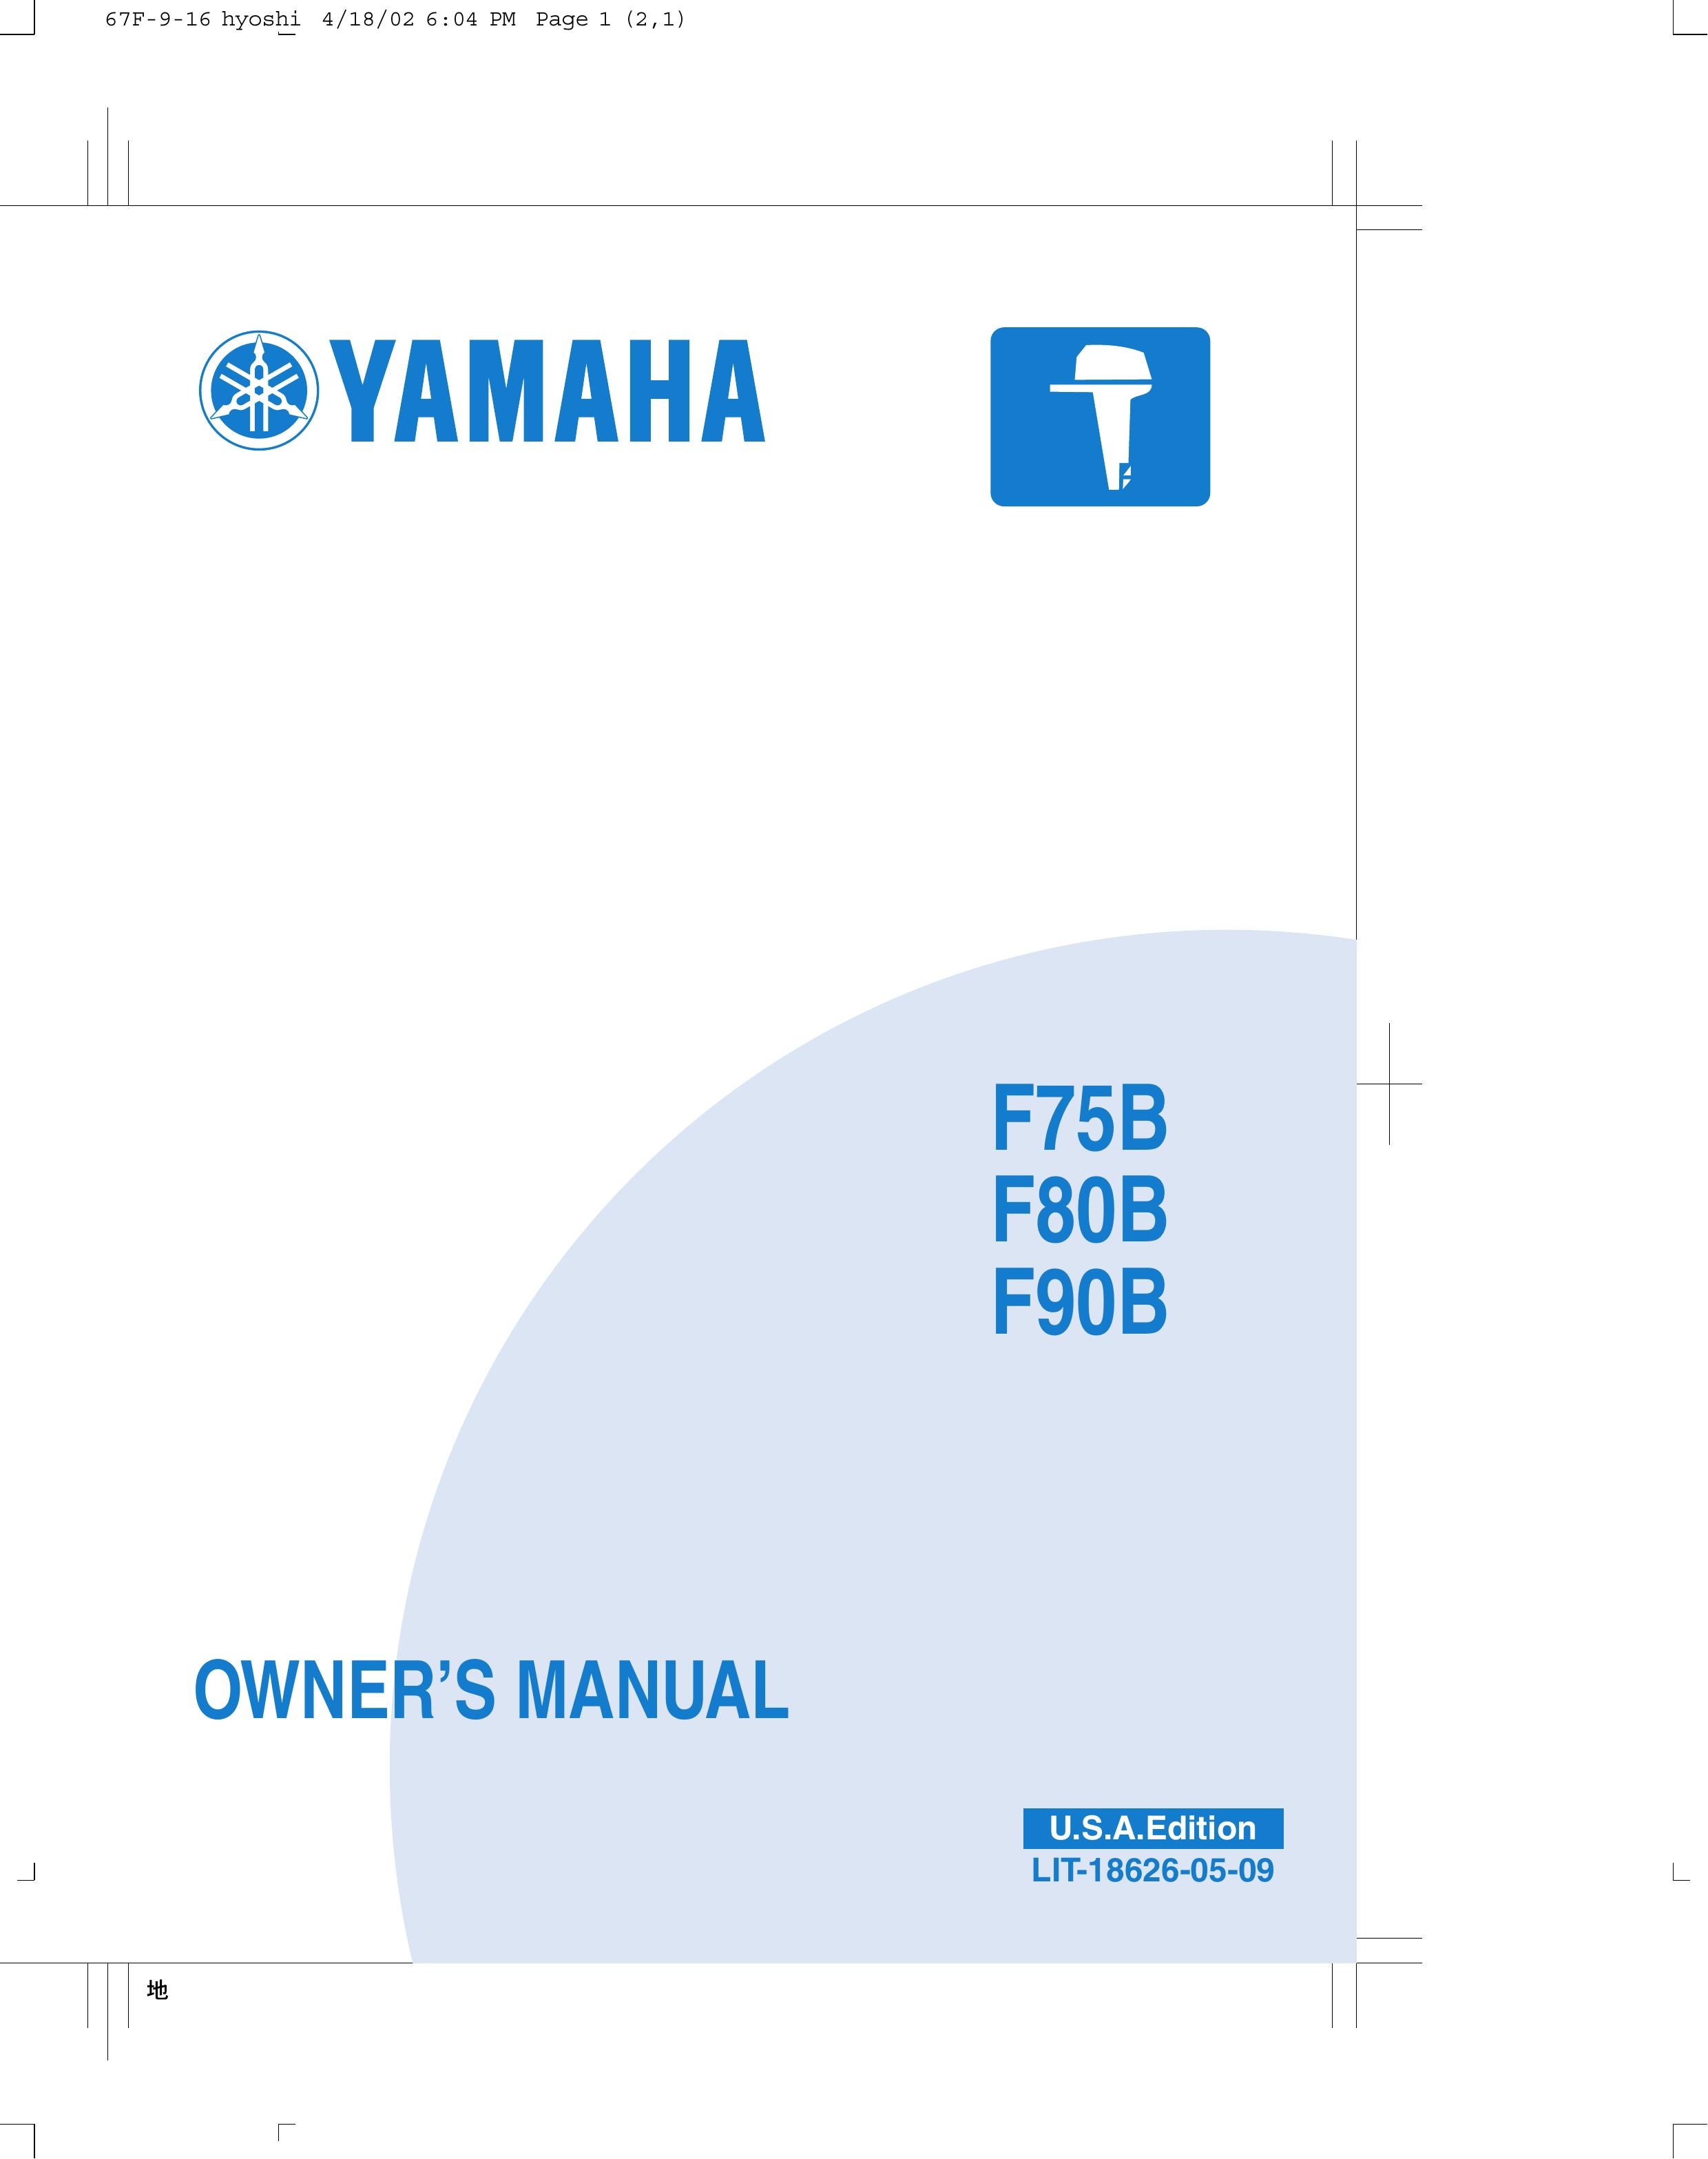 Yamaha F80B Outboard Motor User Manual